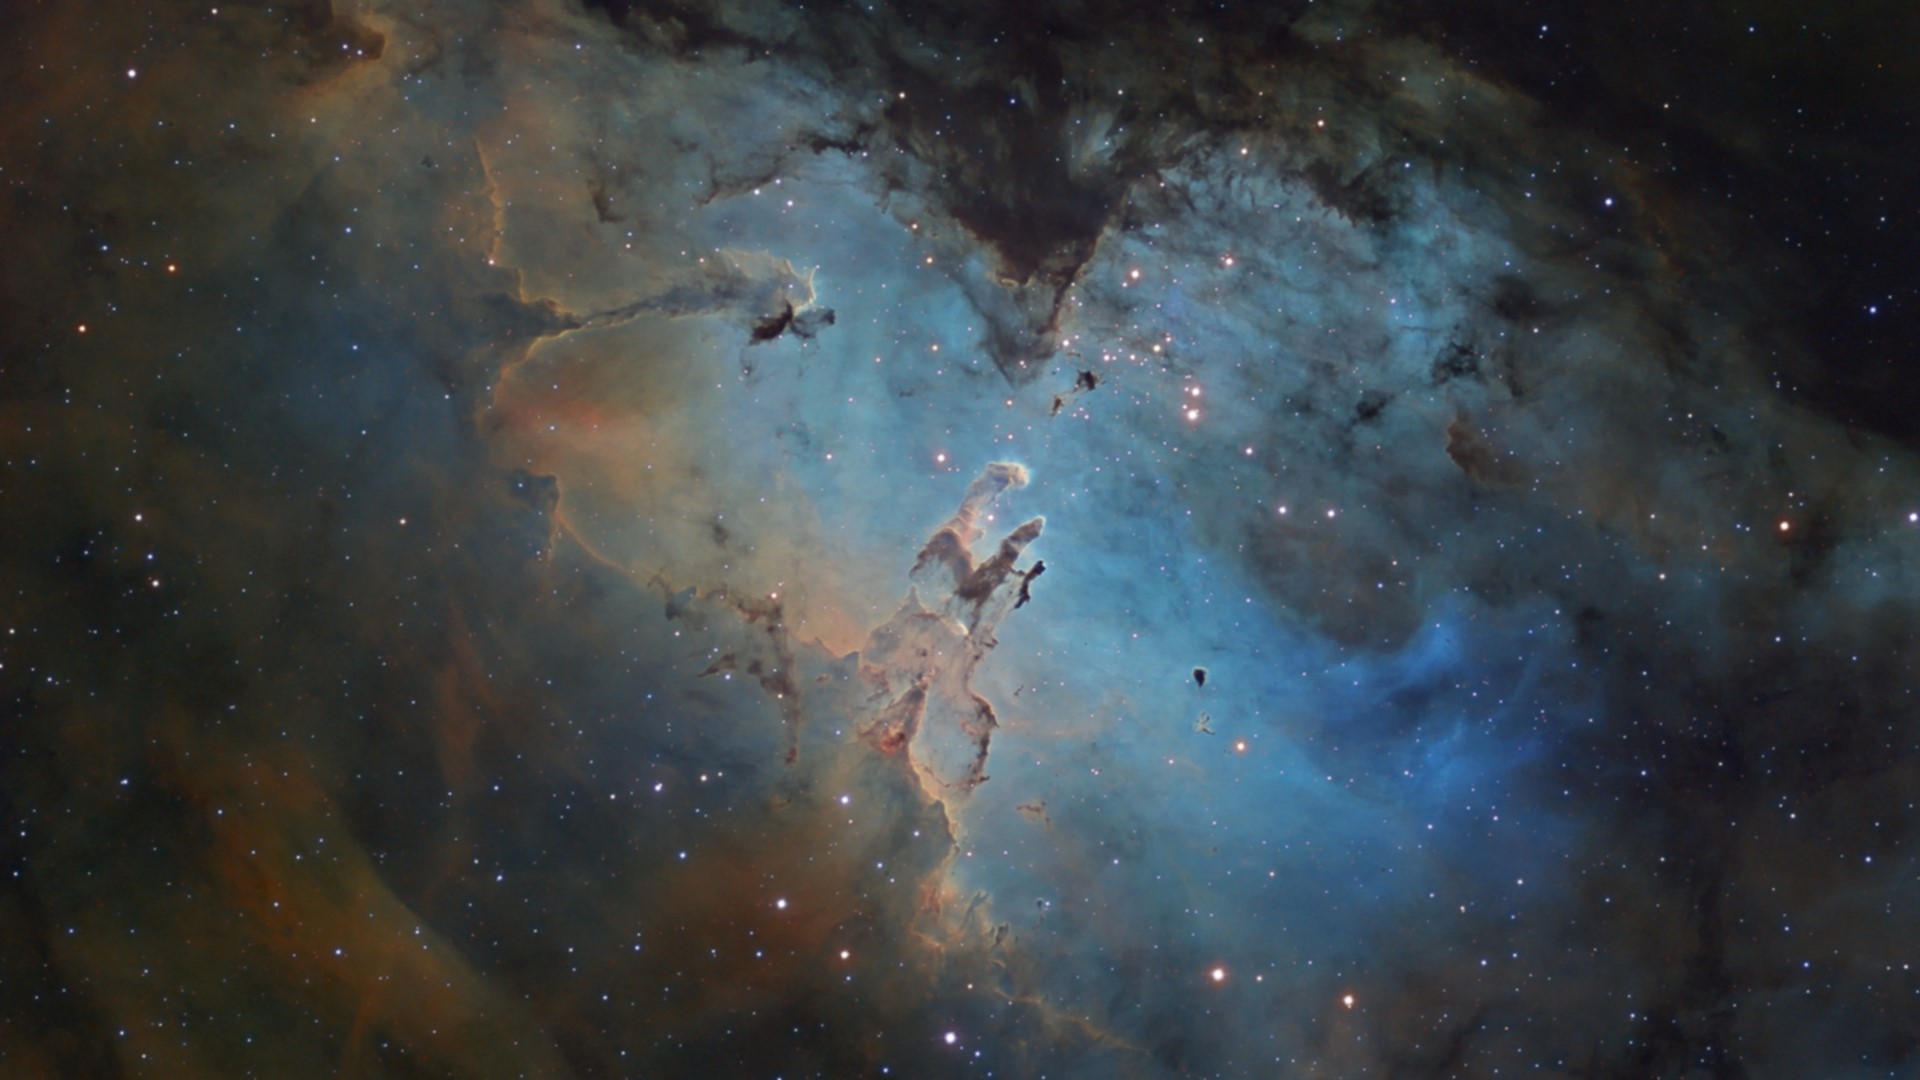 Wallpaper ID 122126 space stars nebula astronomy Dust cloud